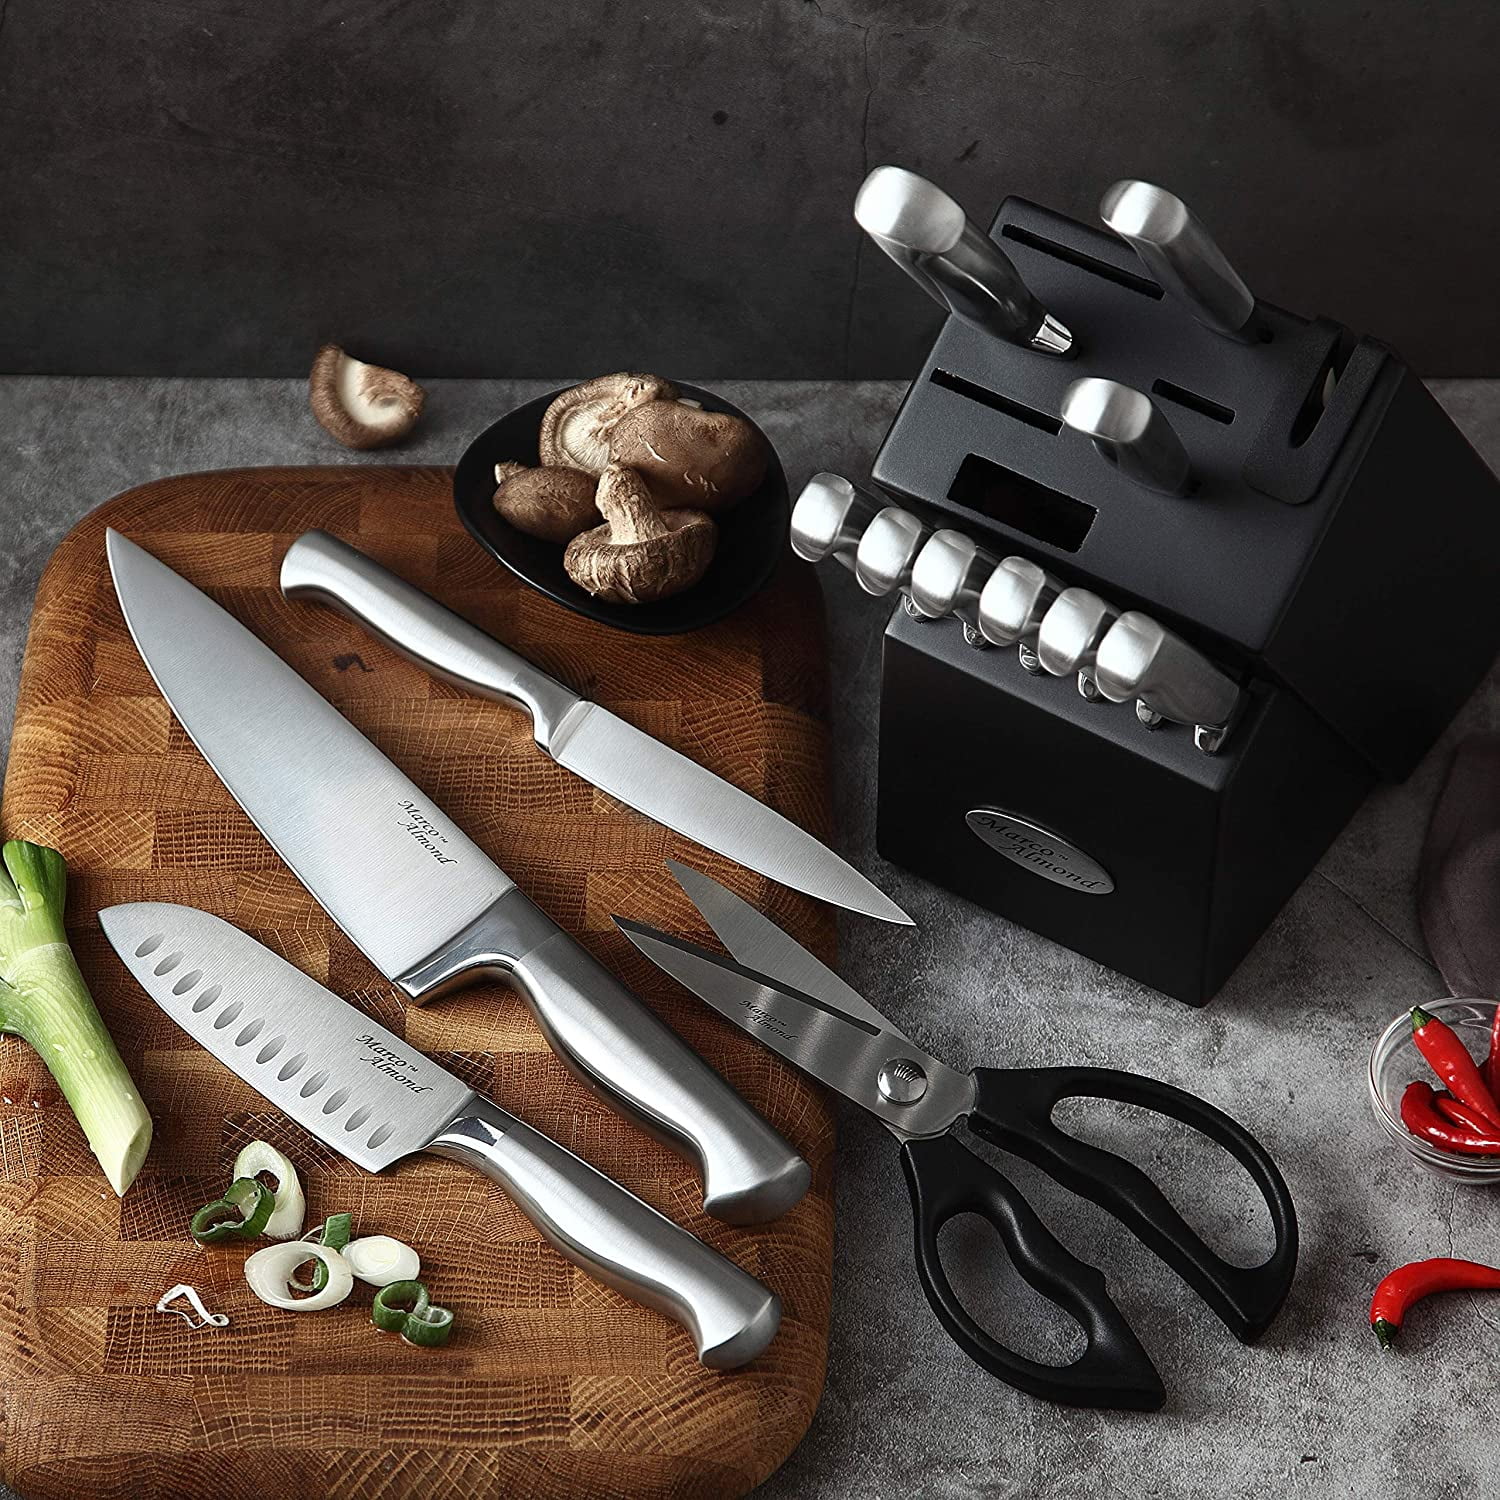 Marco almond Knife Set for Sale in Katy, TX - OfferUp